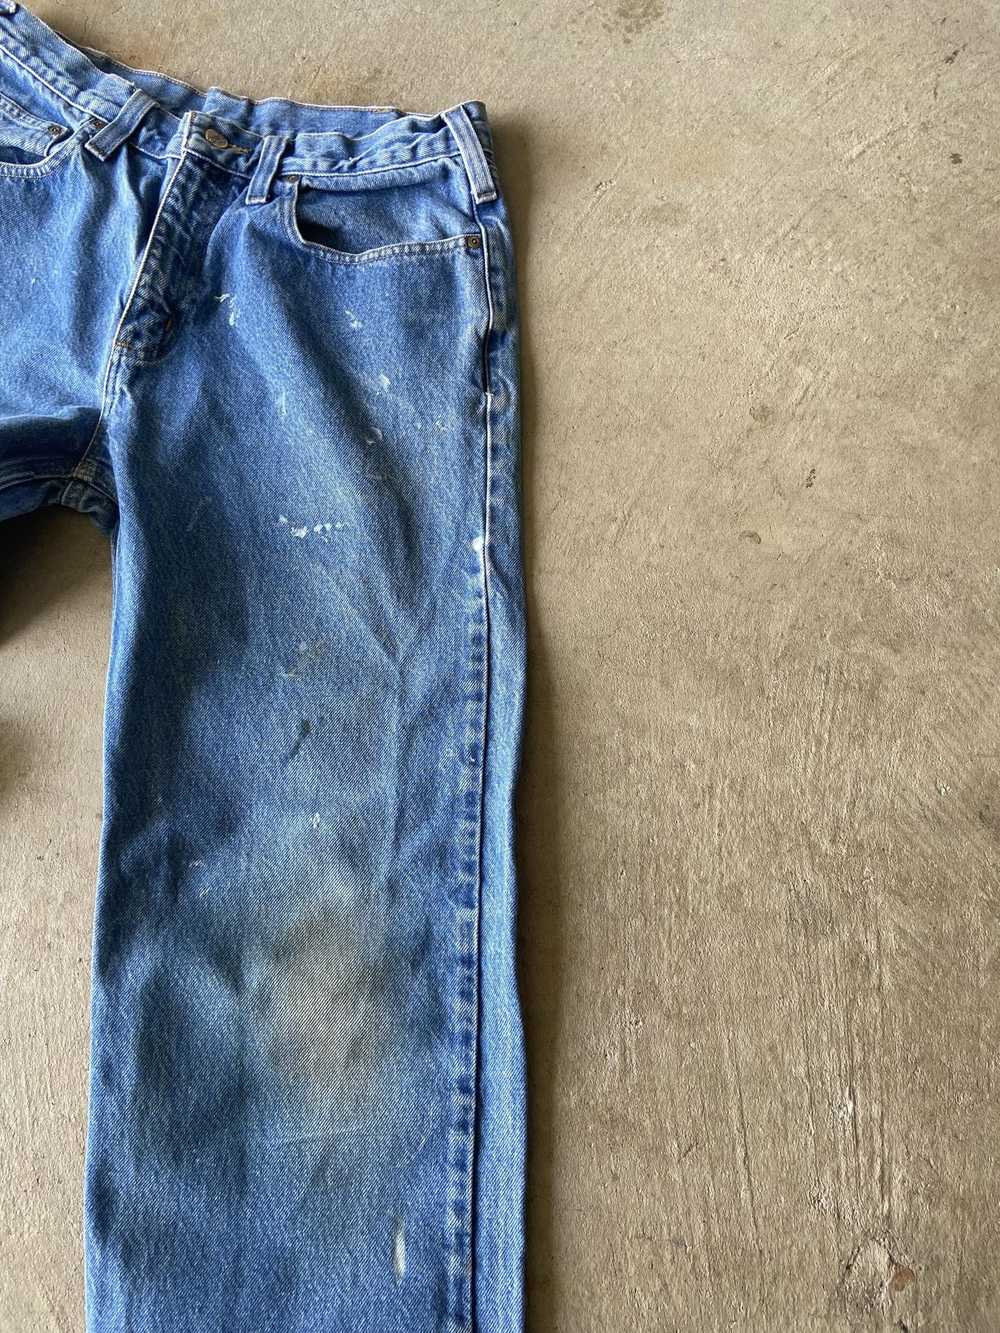 Carhartt Carhartt Thrashed Painter's Blue Jeans - image 3